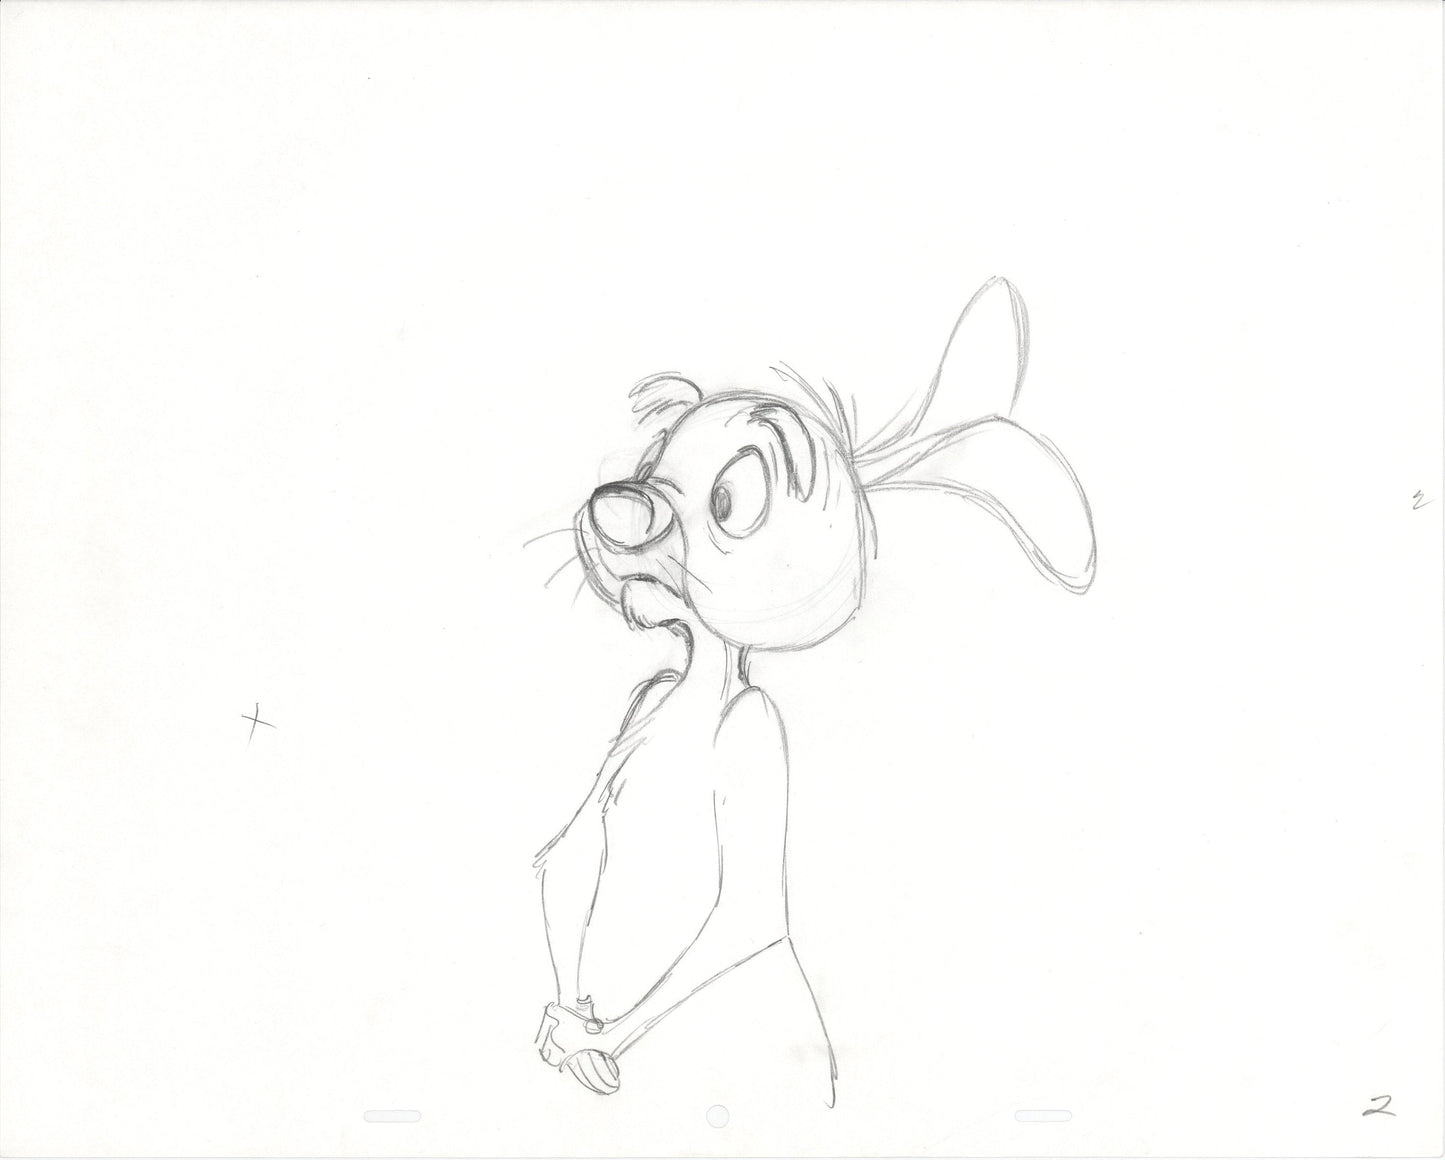 Winnie the Pooh Rabbit Walt Disney Production Animation Cel Drawing b3215